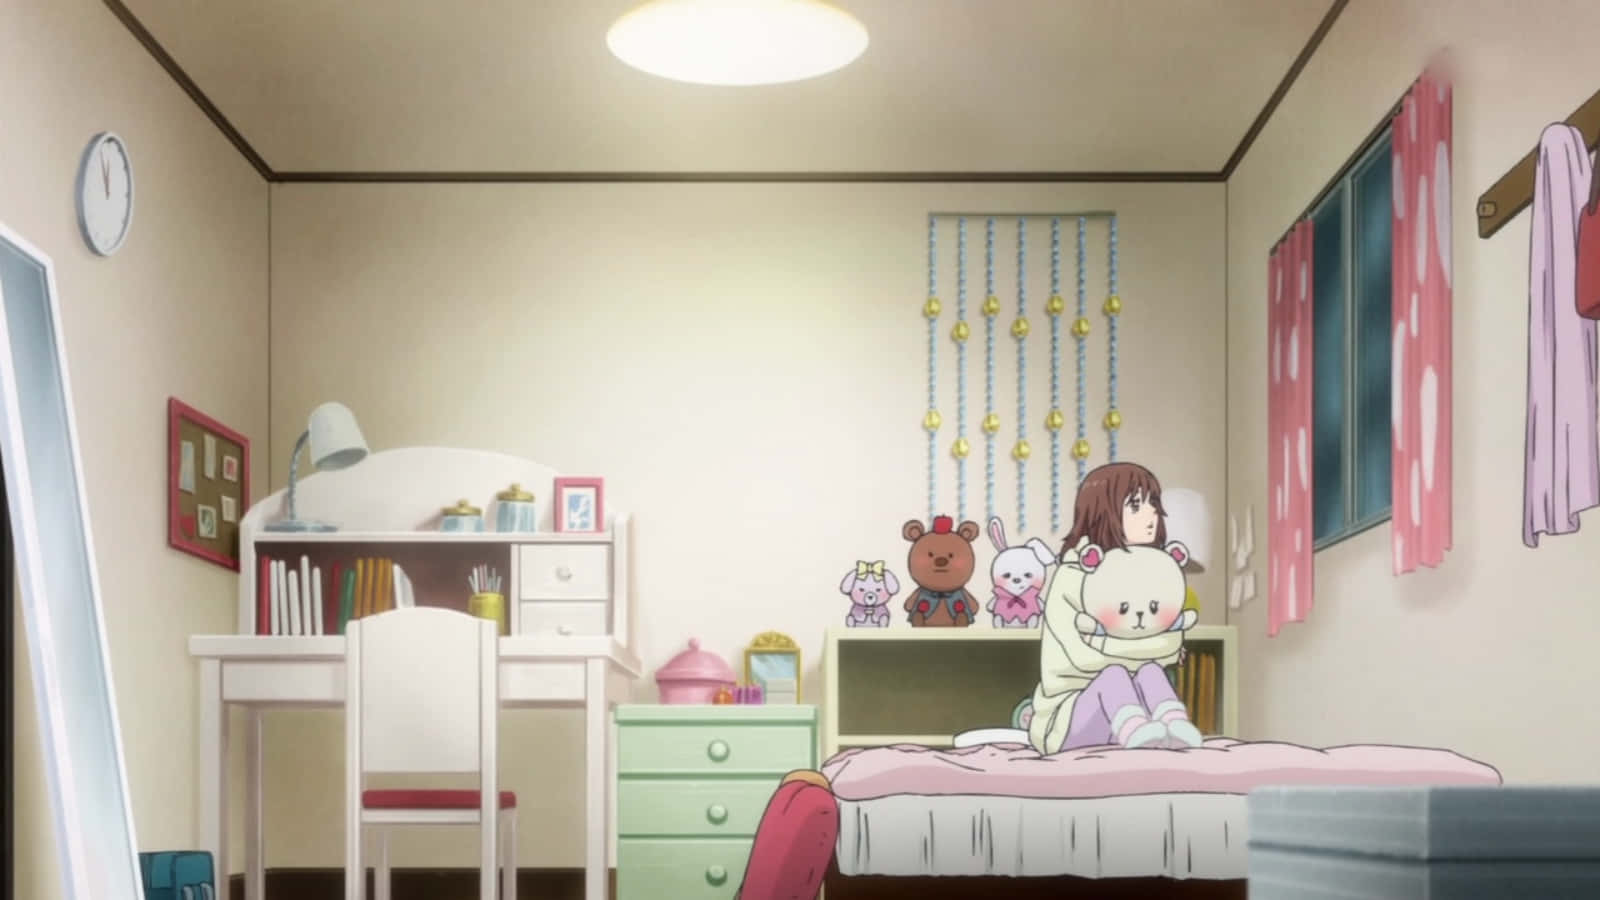 Anime Bedroom Background Images  Free Download on Freepik